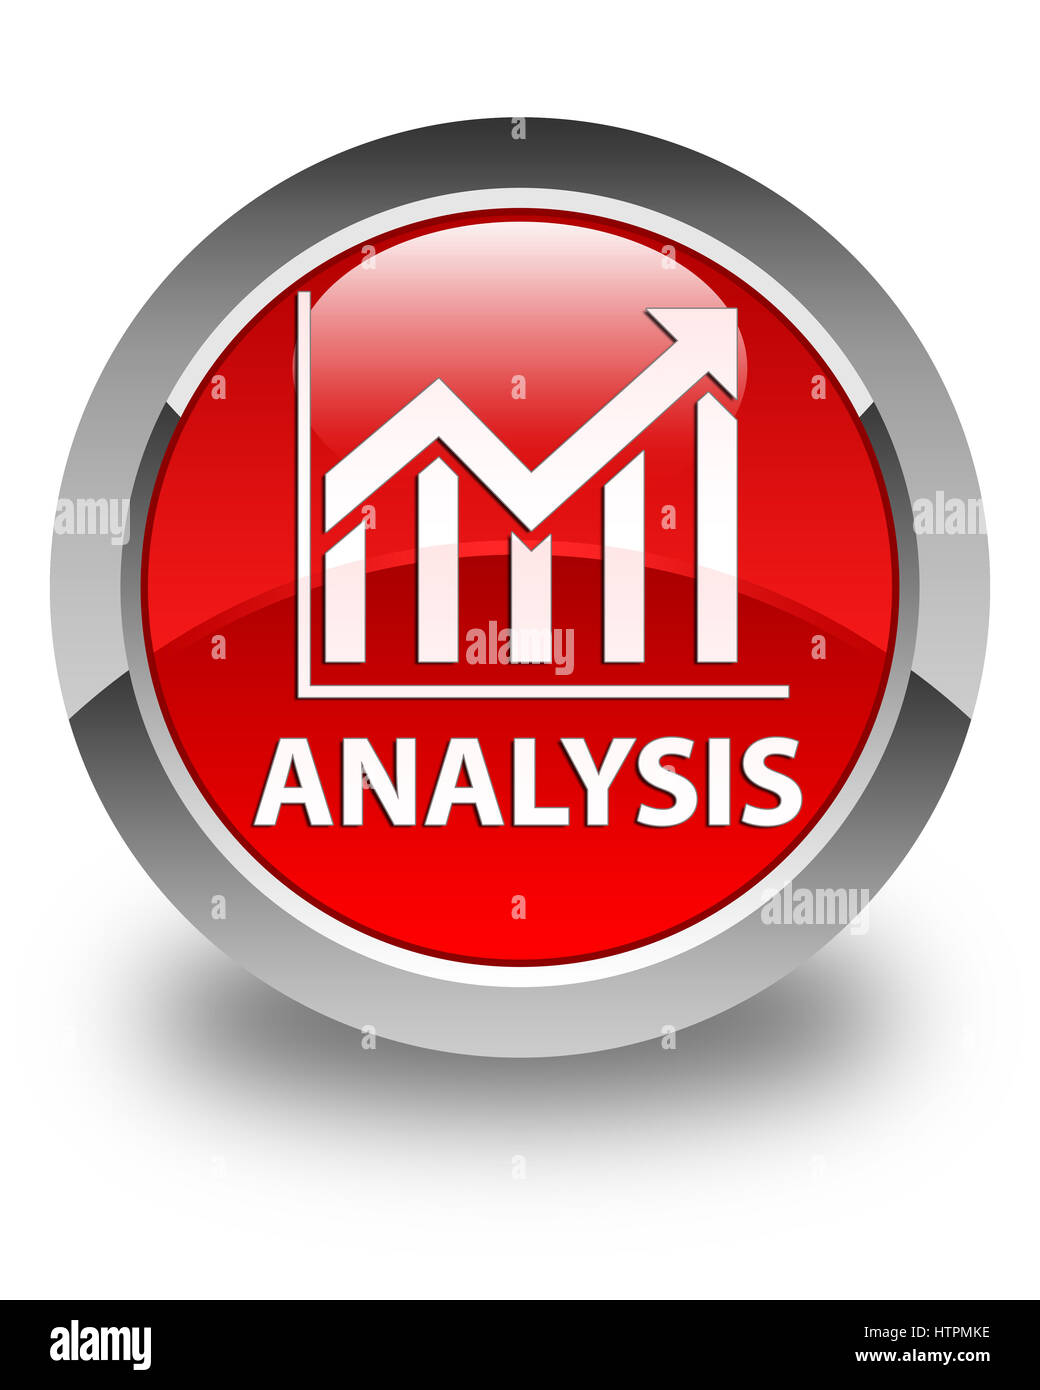 (Icône) Analyse statistique isolé sur le bouton rond rouge brillant abstract illustration Banque D'Images